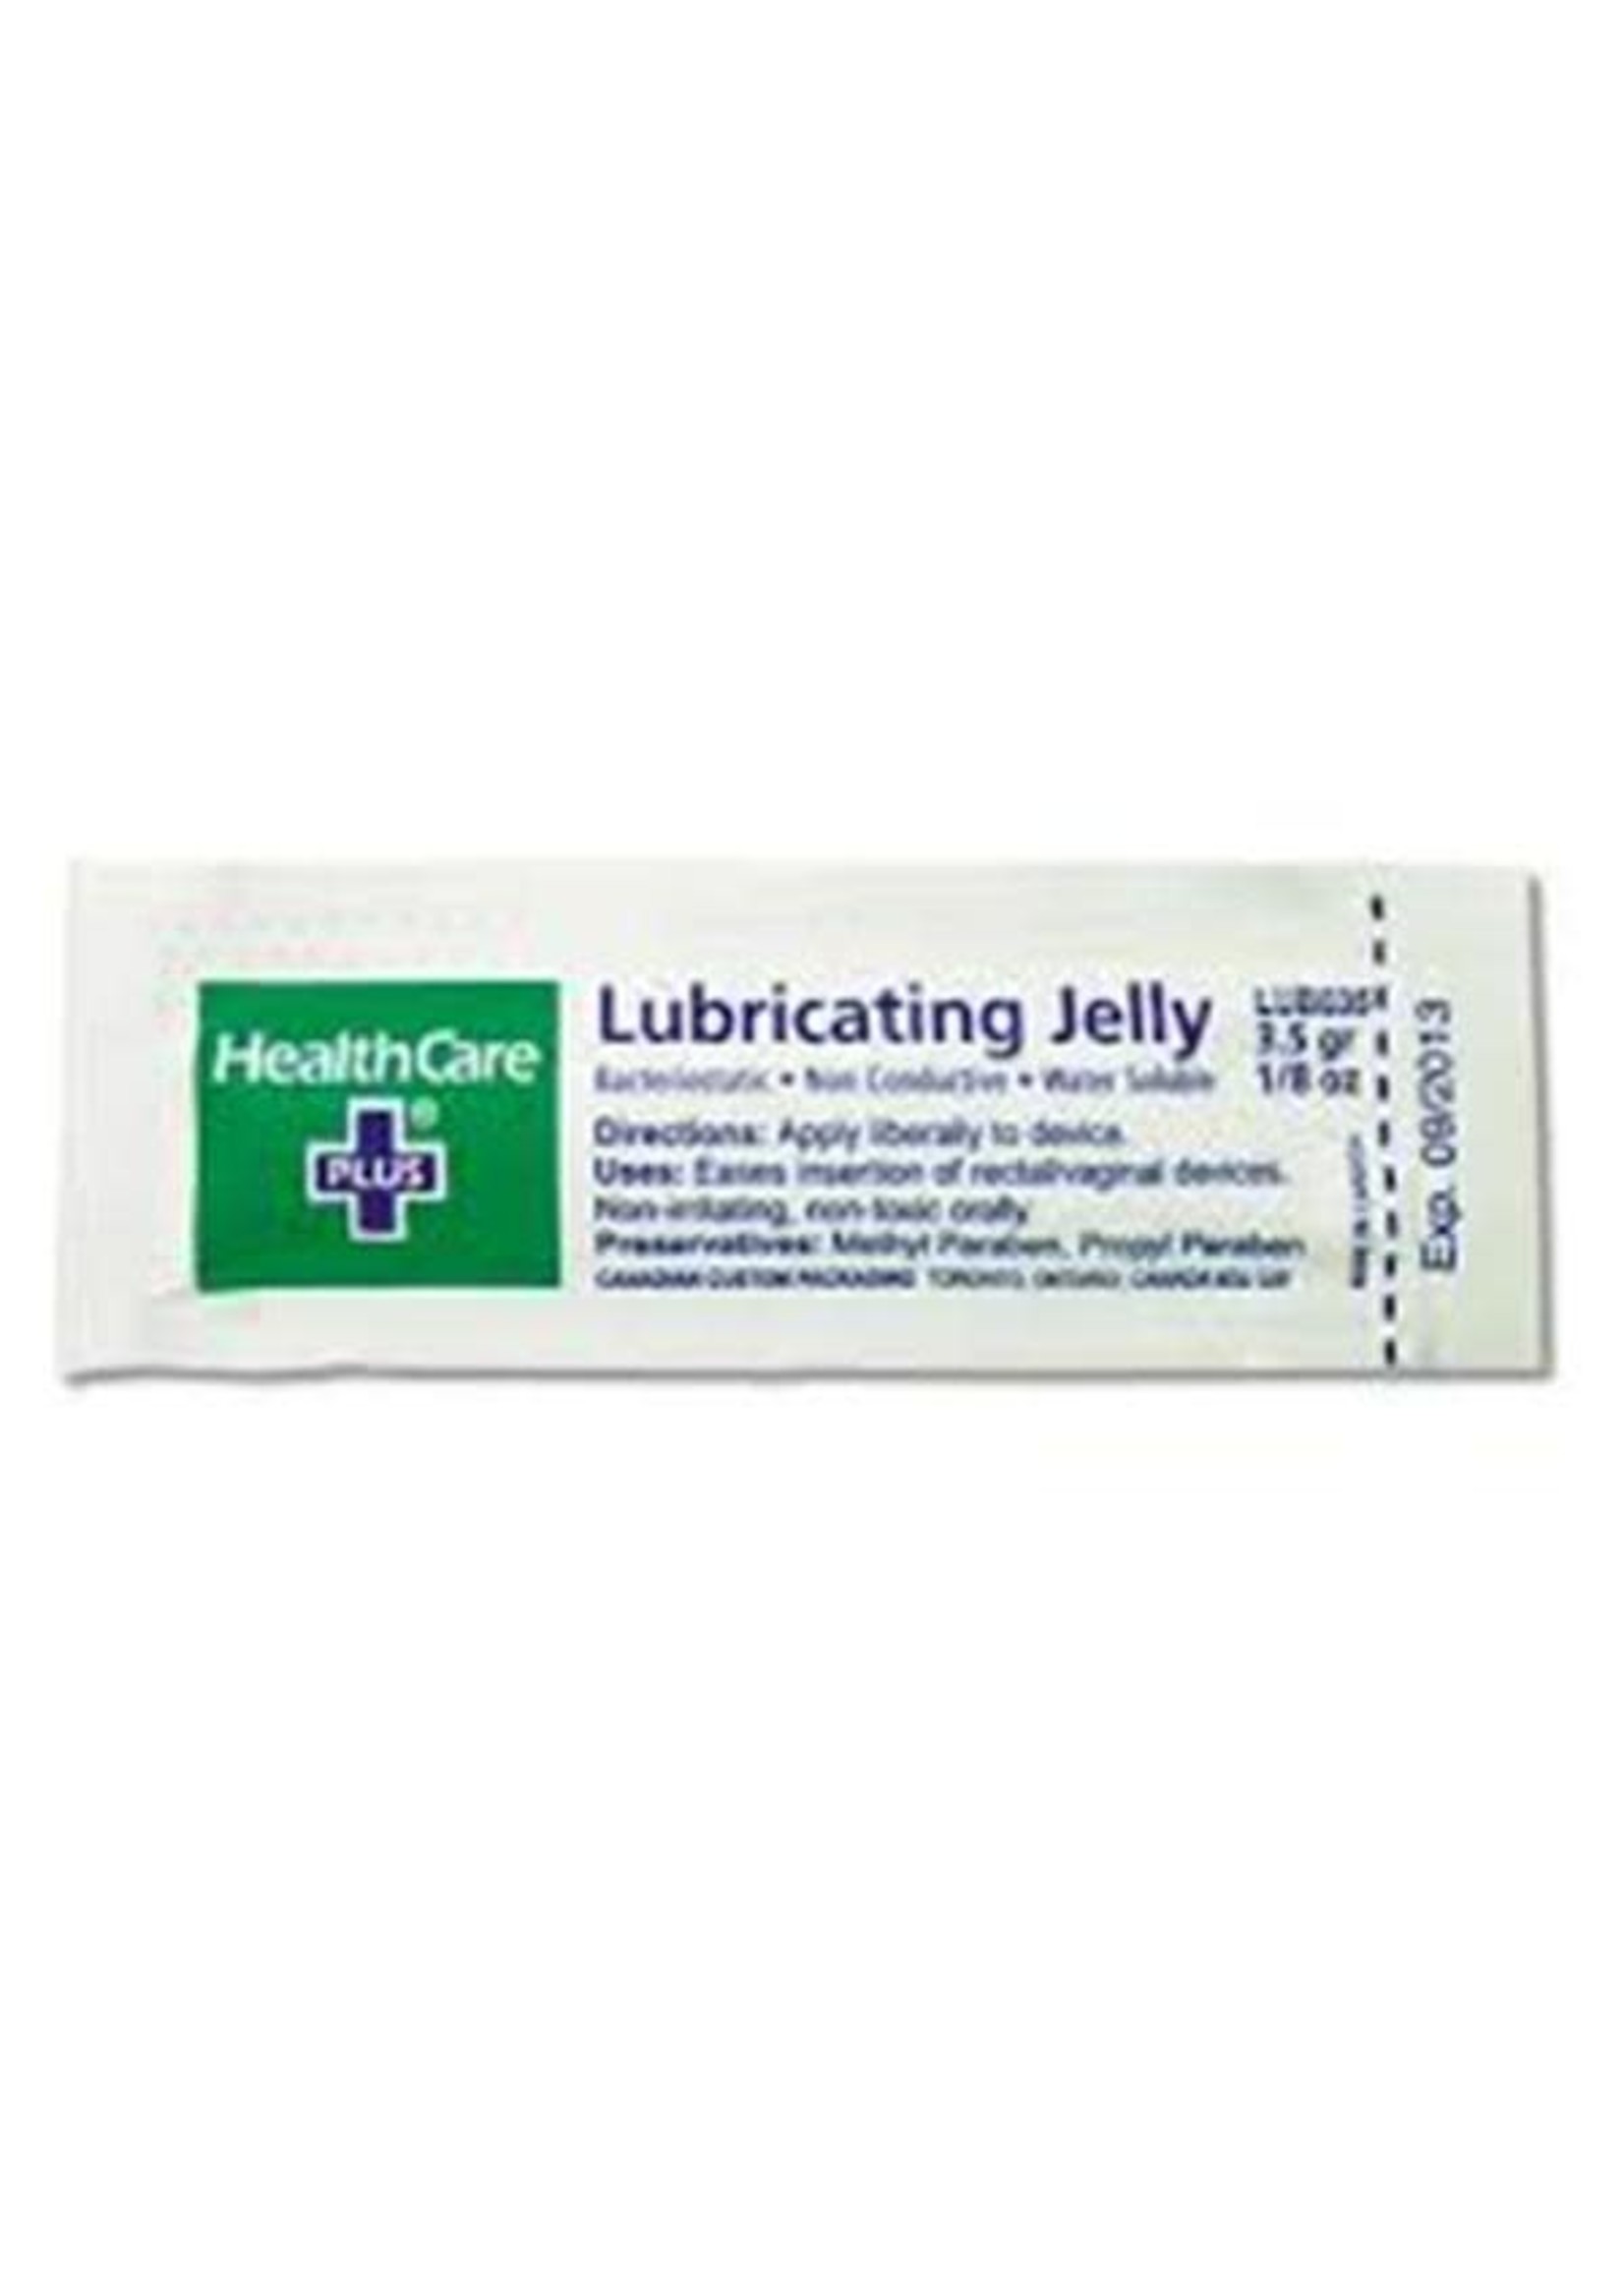 Lubricating Jelly, Sterile 3gm. 12/pk